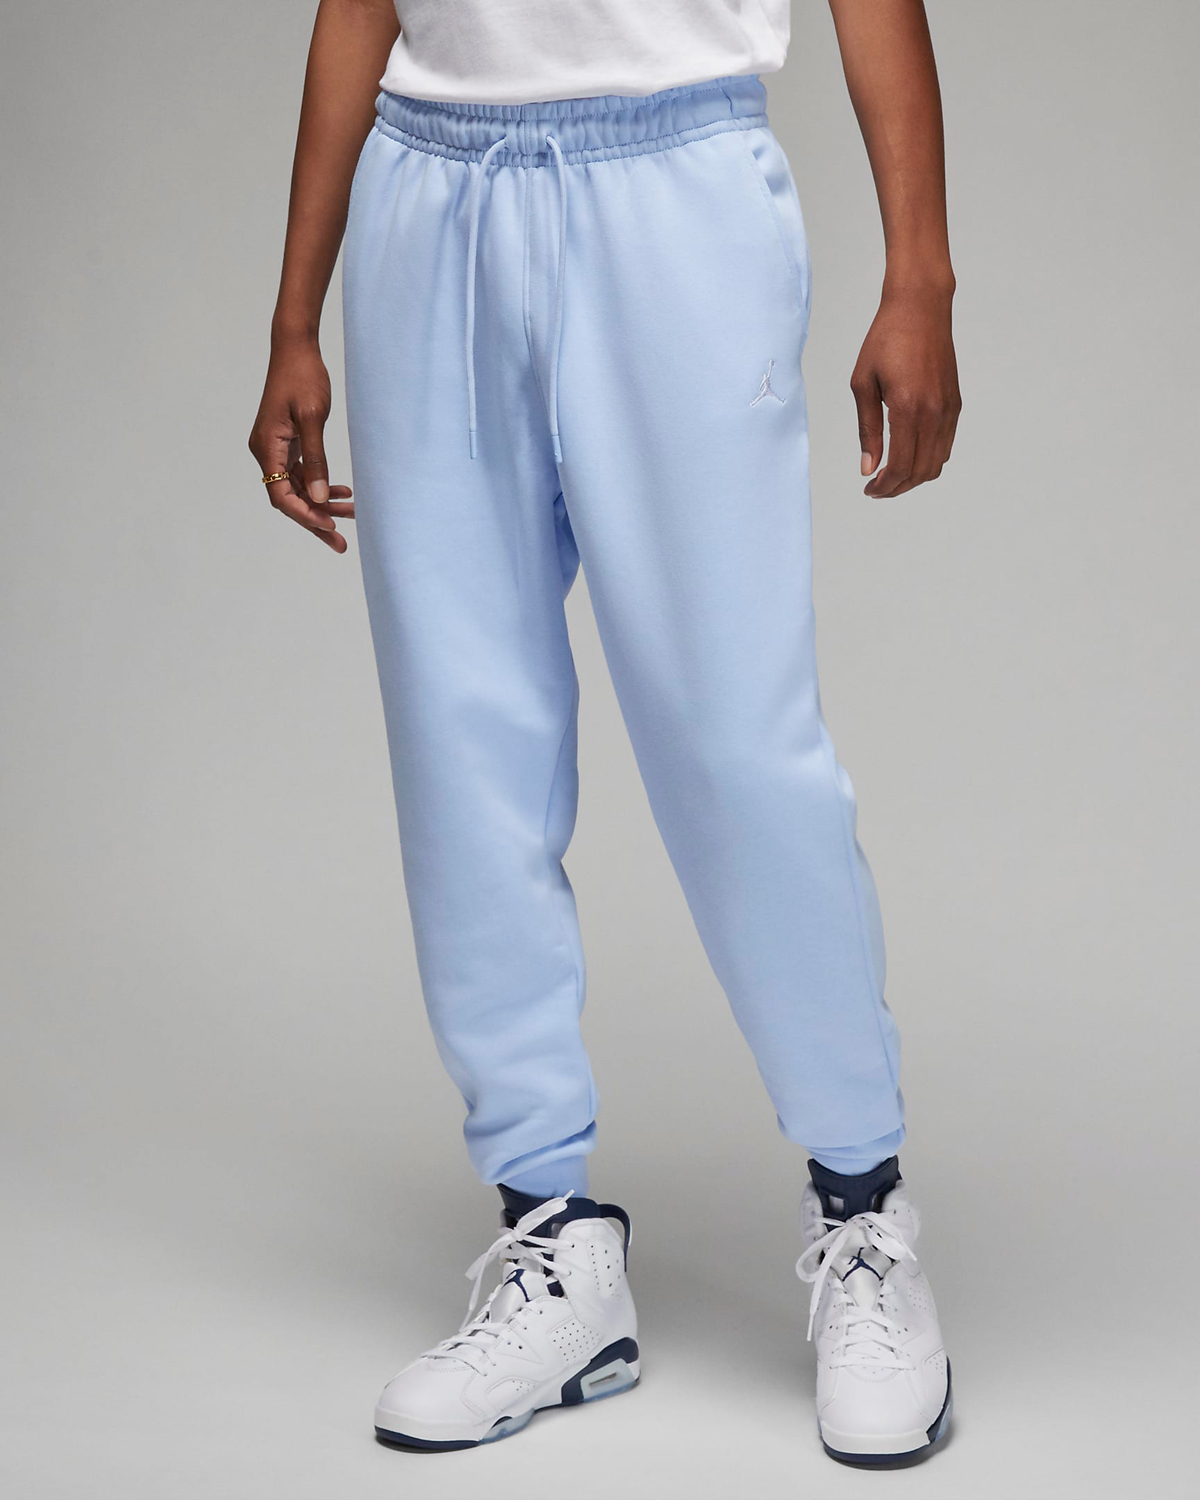 Jordan-Essentials-Fleece-Pants-Royal-Tint